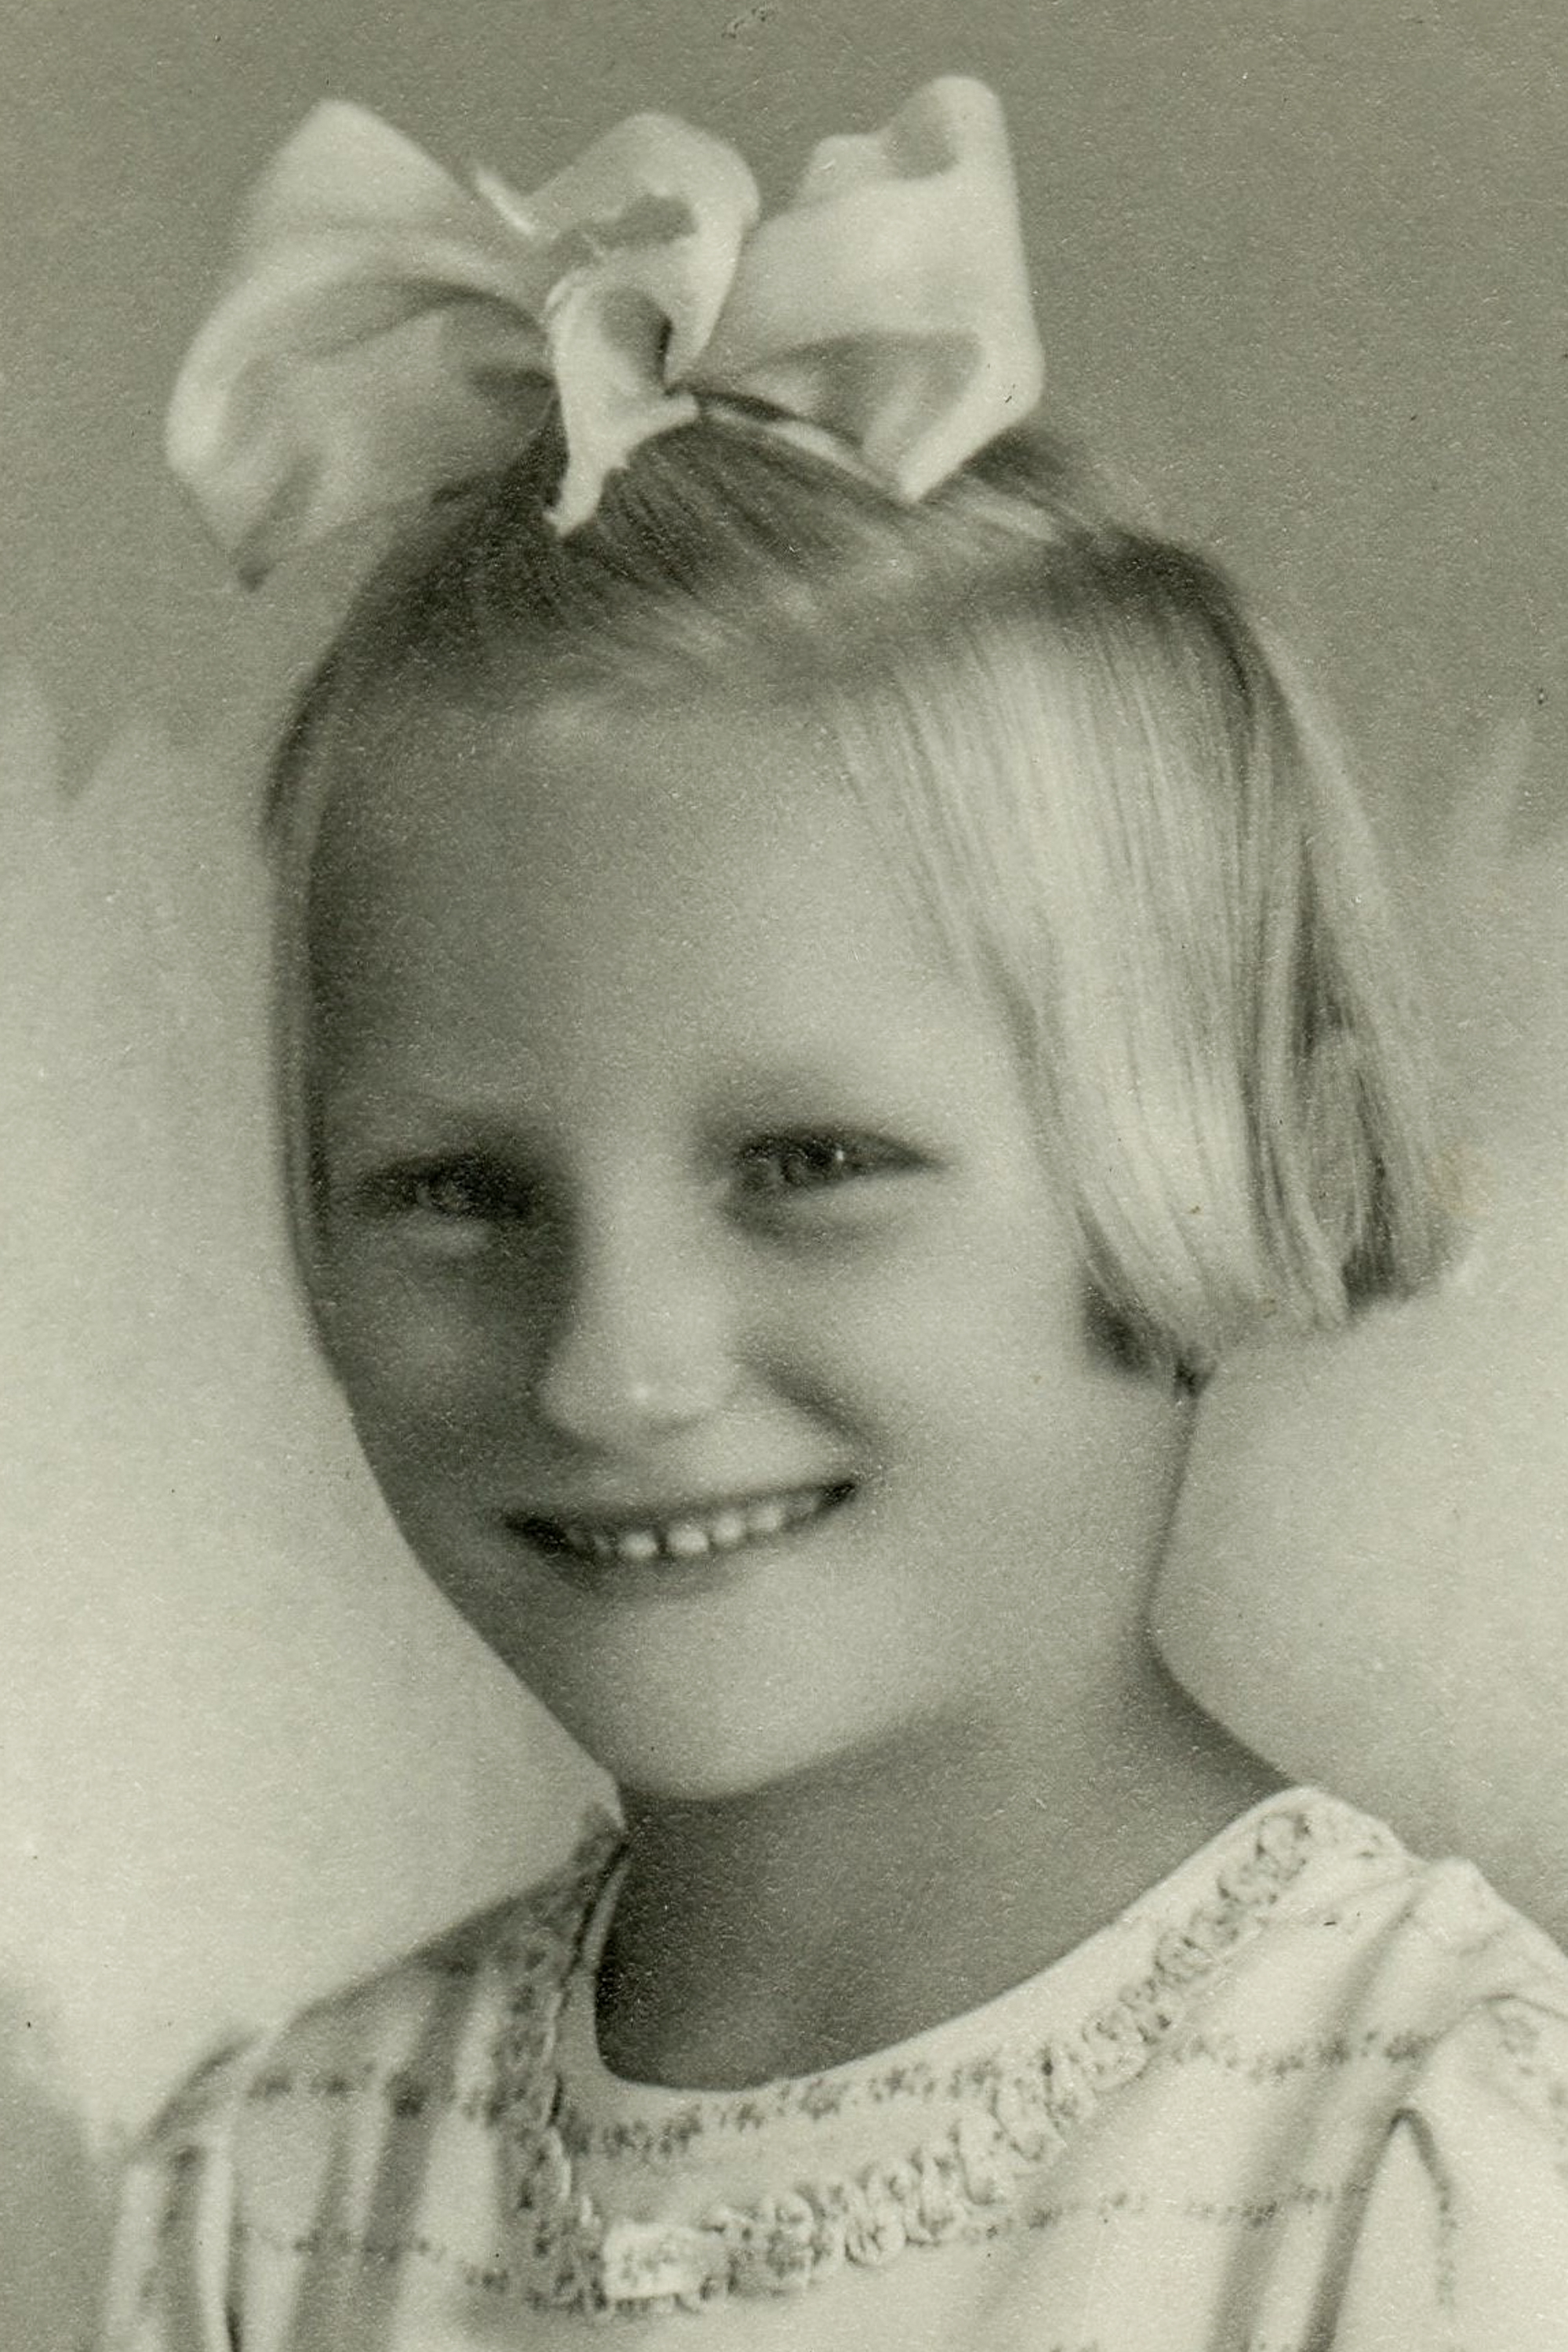 Six years old Marie Králová in portrait photo